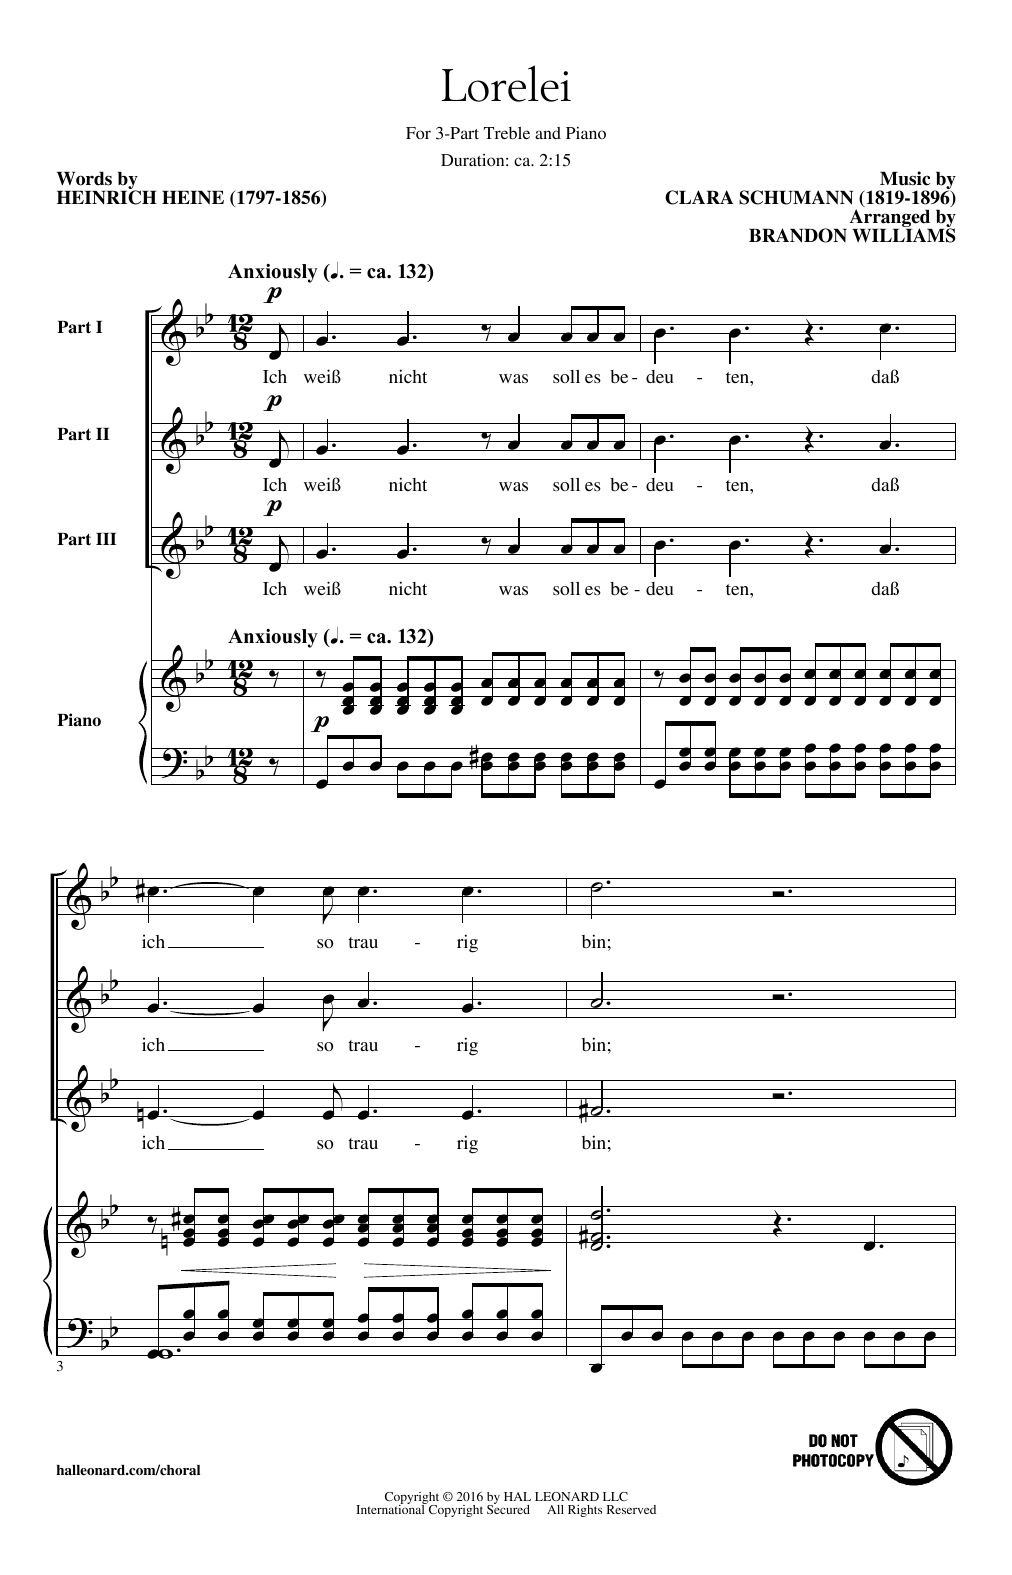 Brandon Williams Lorelei Sheet Music Notes & Chords for 3-Part Treble - Download or Print PDF